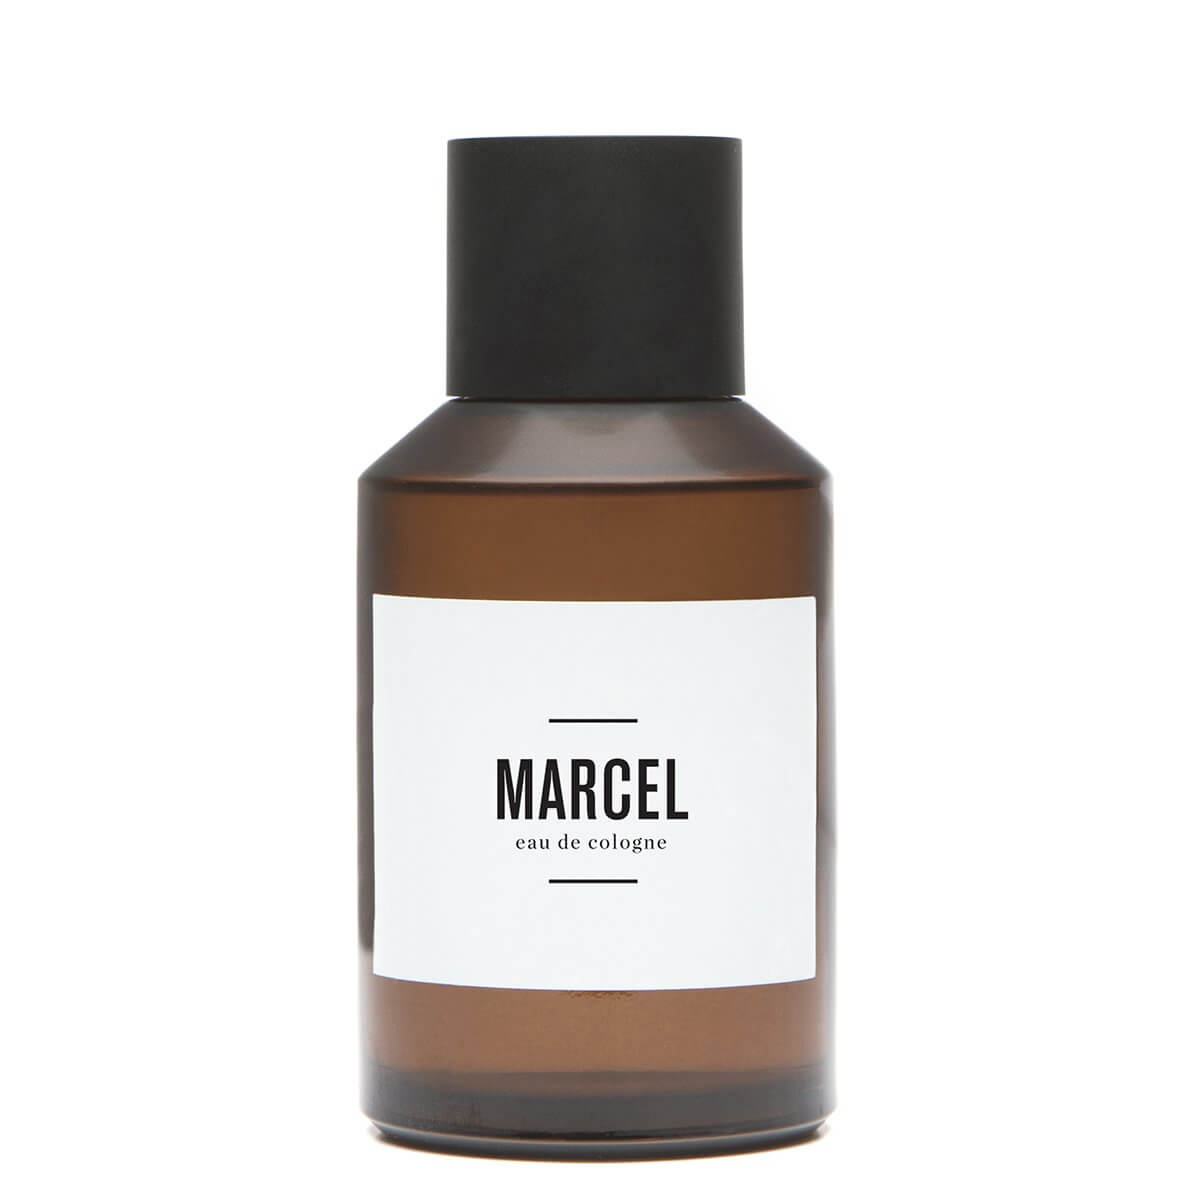 Marcel by Marie Jeanne at Indigo Perfumery